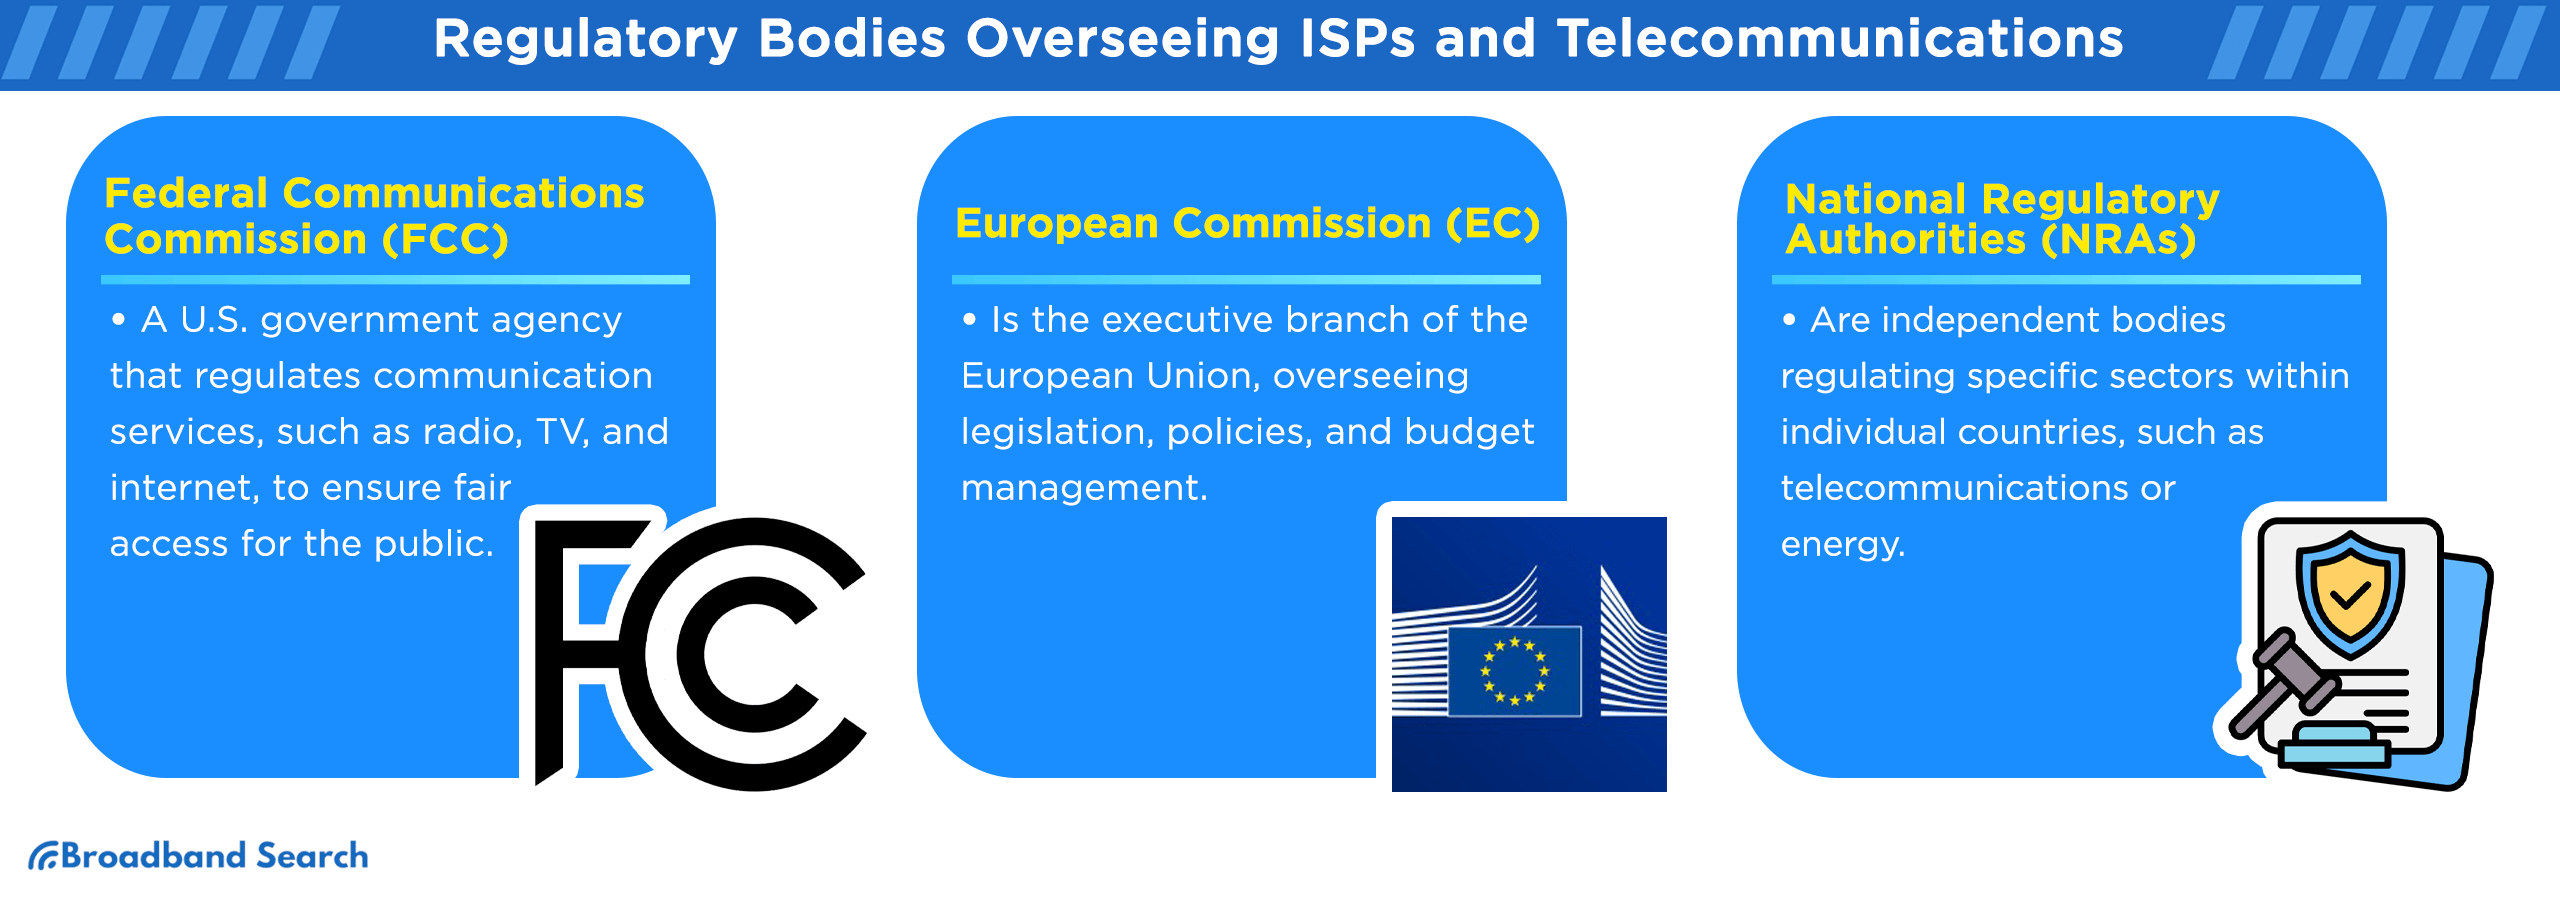 Regulatory bodies overseeing ISPs and telecommunications